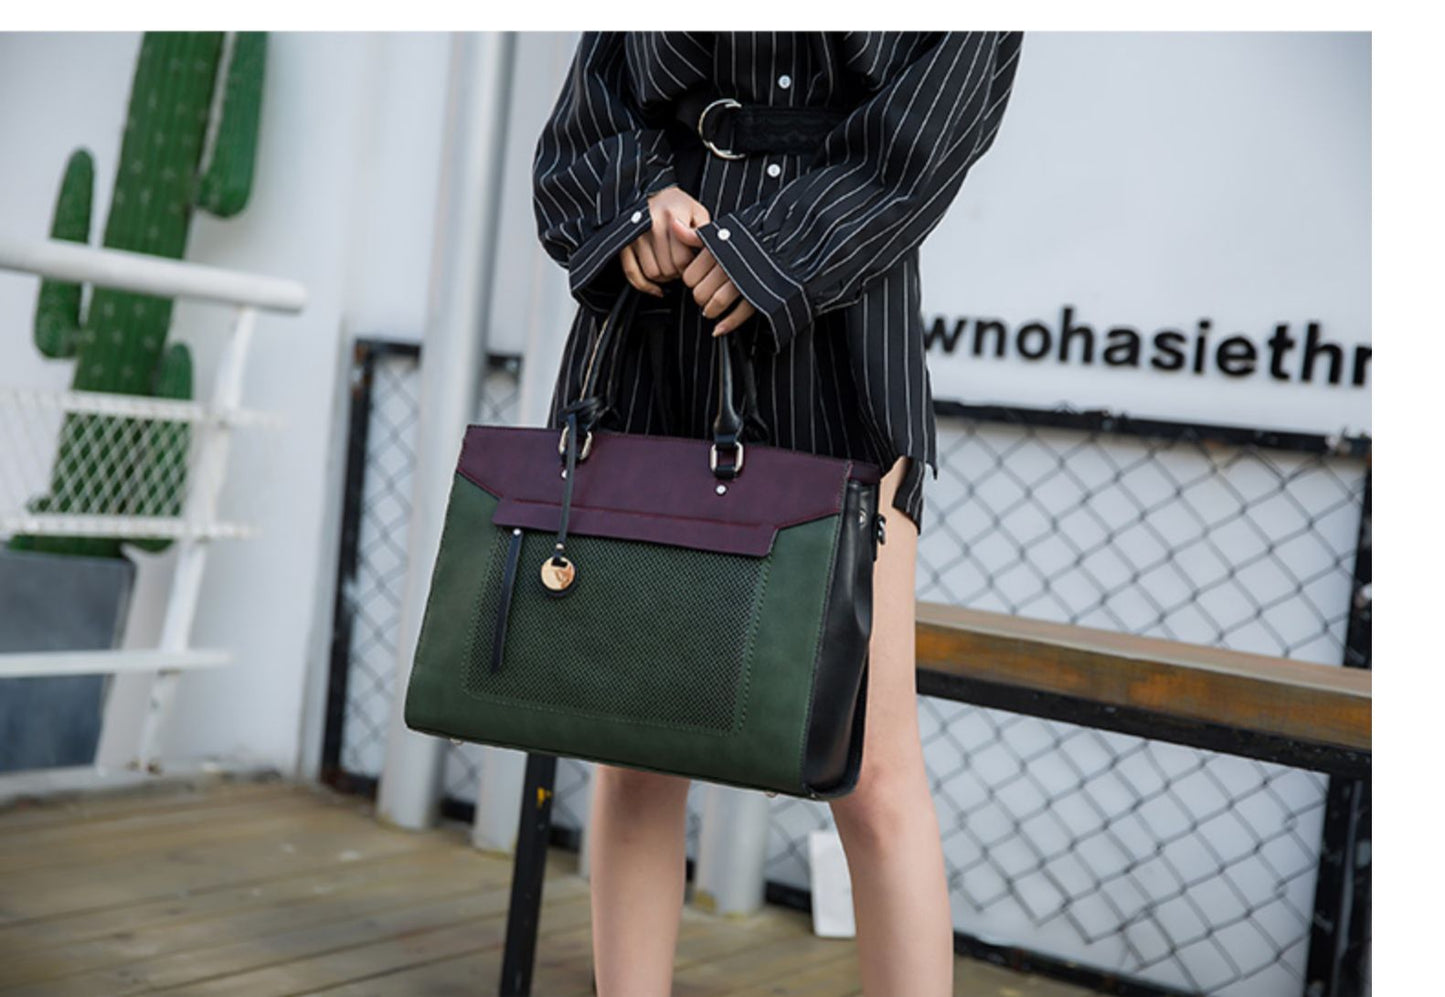 Luxury Fashion Women Handbag Document Shoulder Slung Tote Bag Female 14 Inch Laptop Briefcase Leather Messenger Crossbody Bags